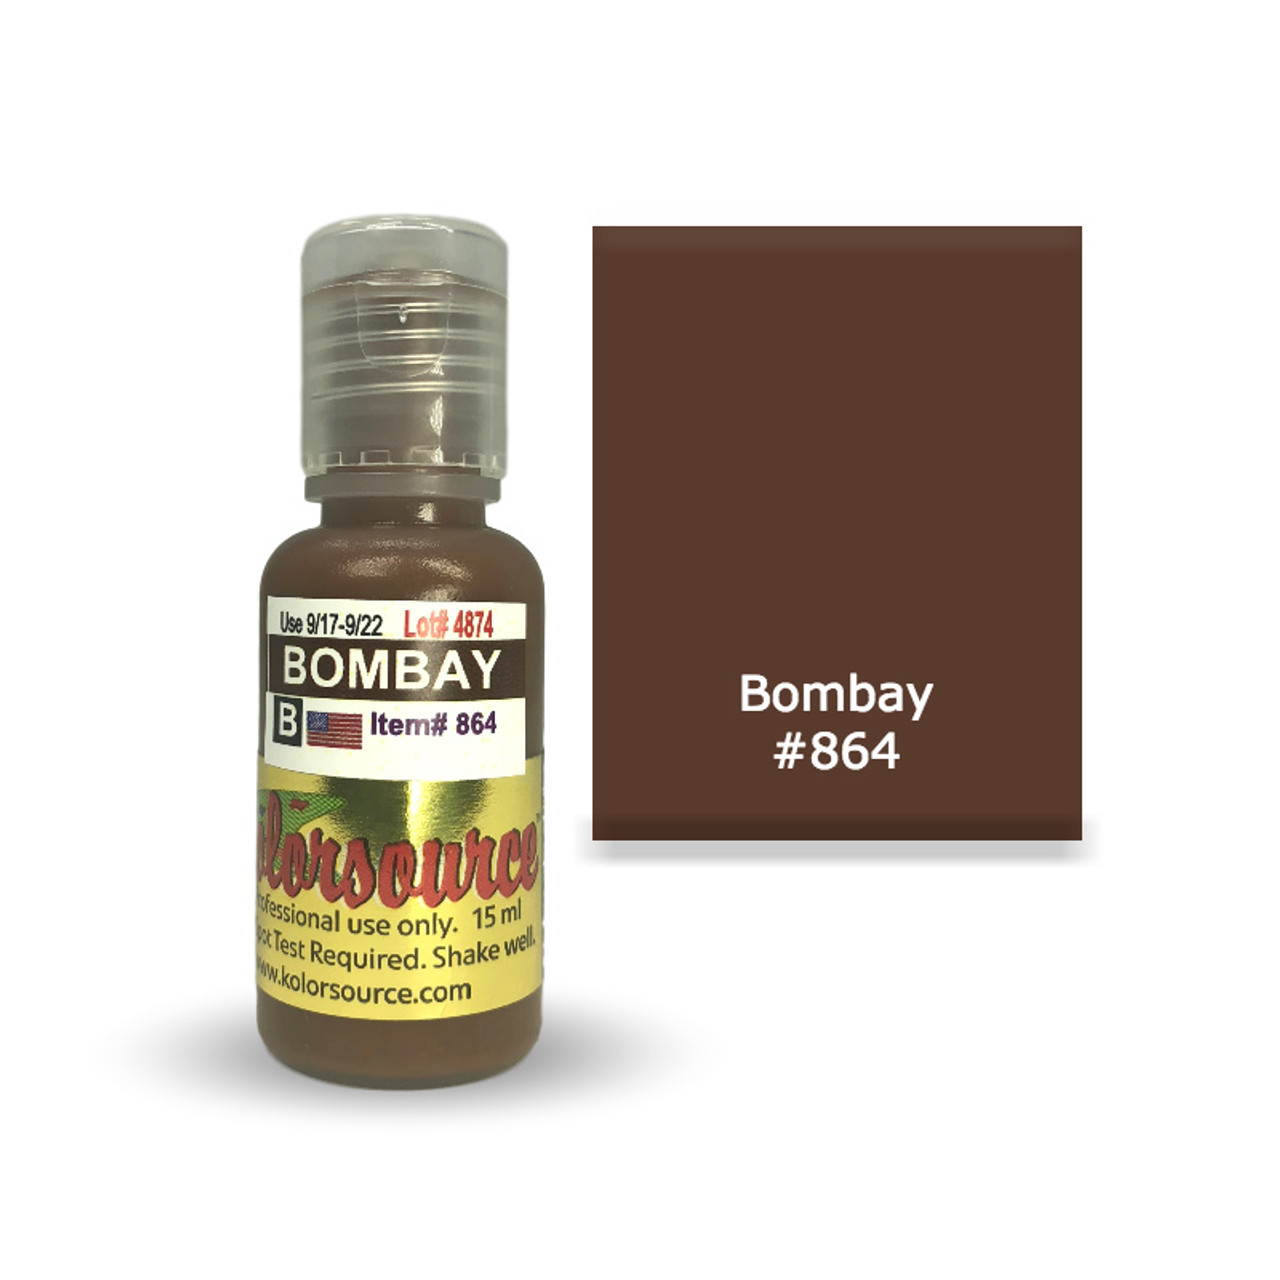 Kolorsource Permanent Makeup Pigment (PMU) Bombay Brown #864 - 15ml